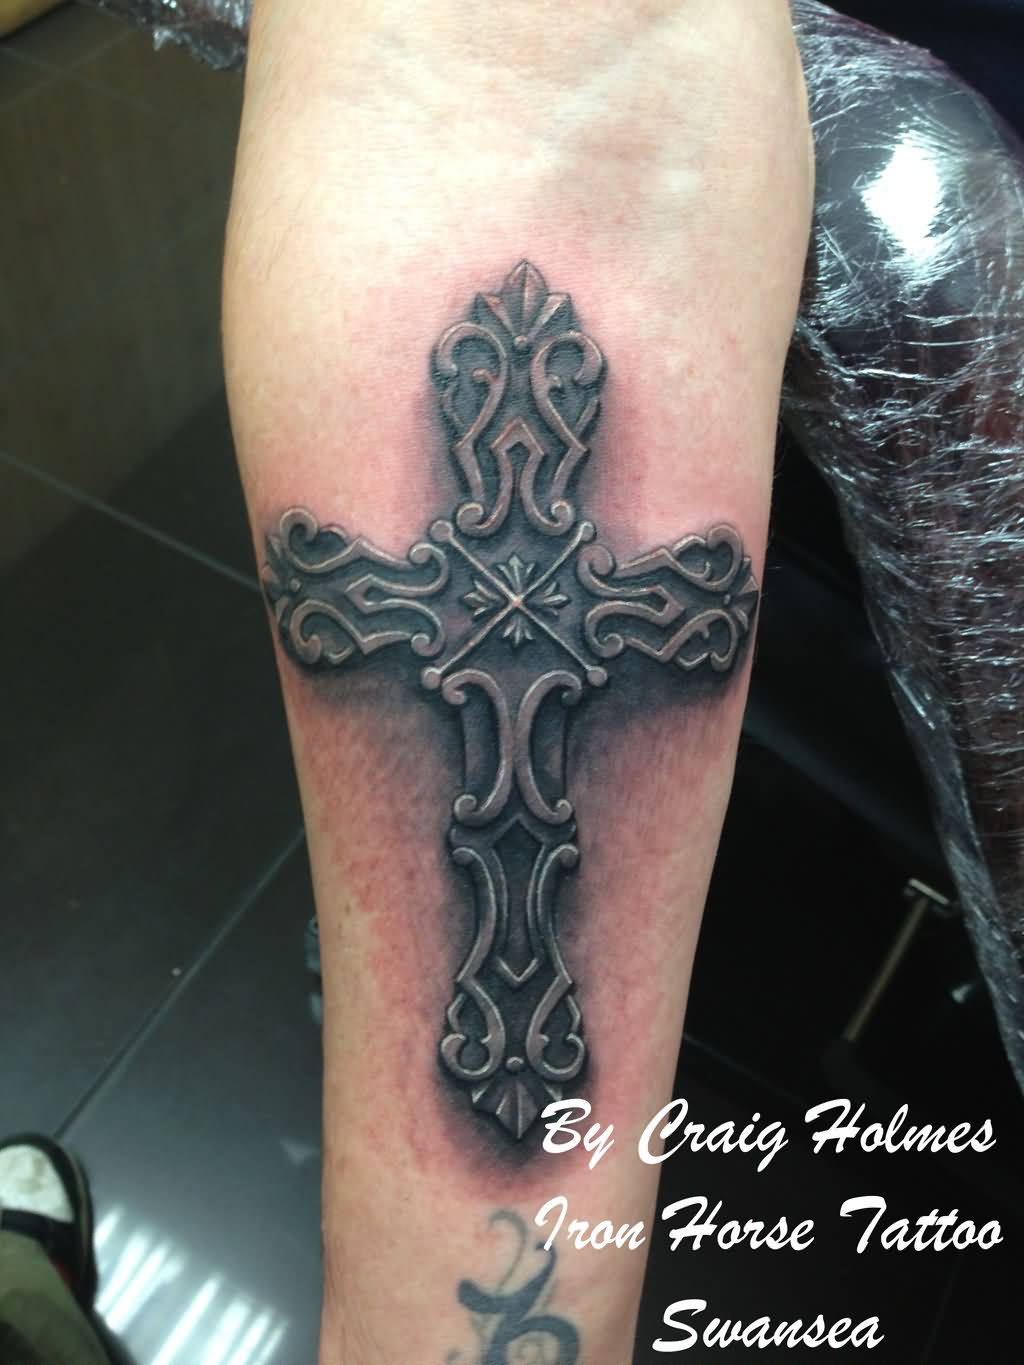 Old Dark Metallic Cross Tattoo Design On Forearm by Craig Holmes